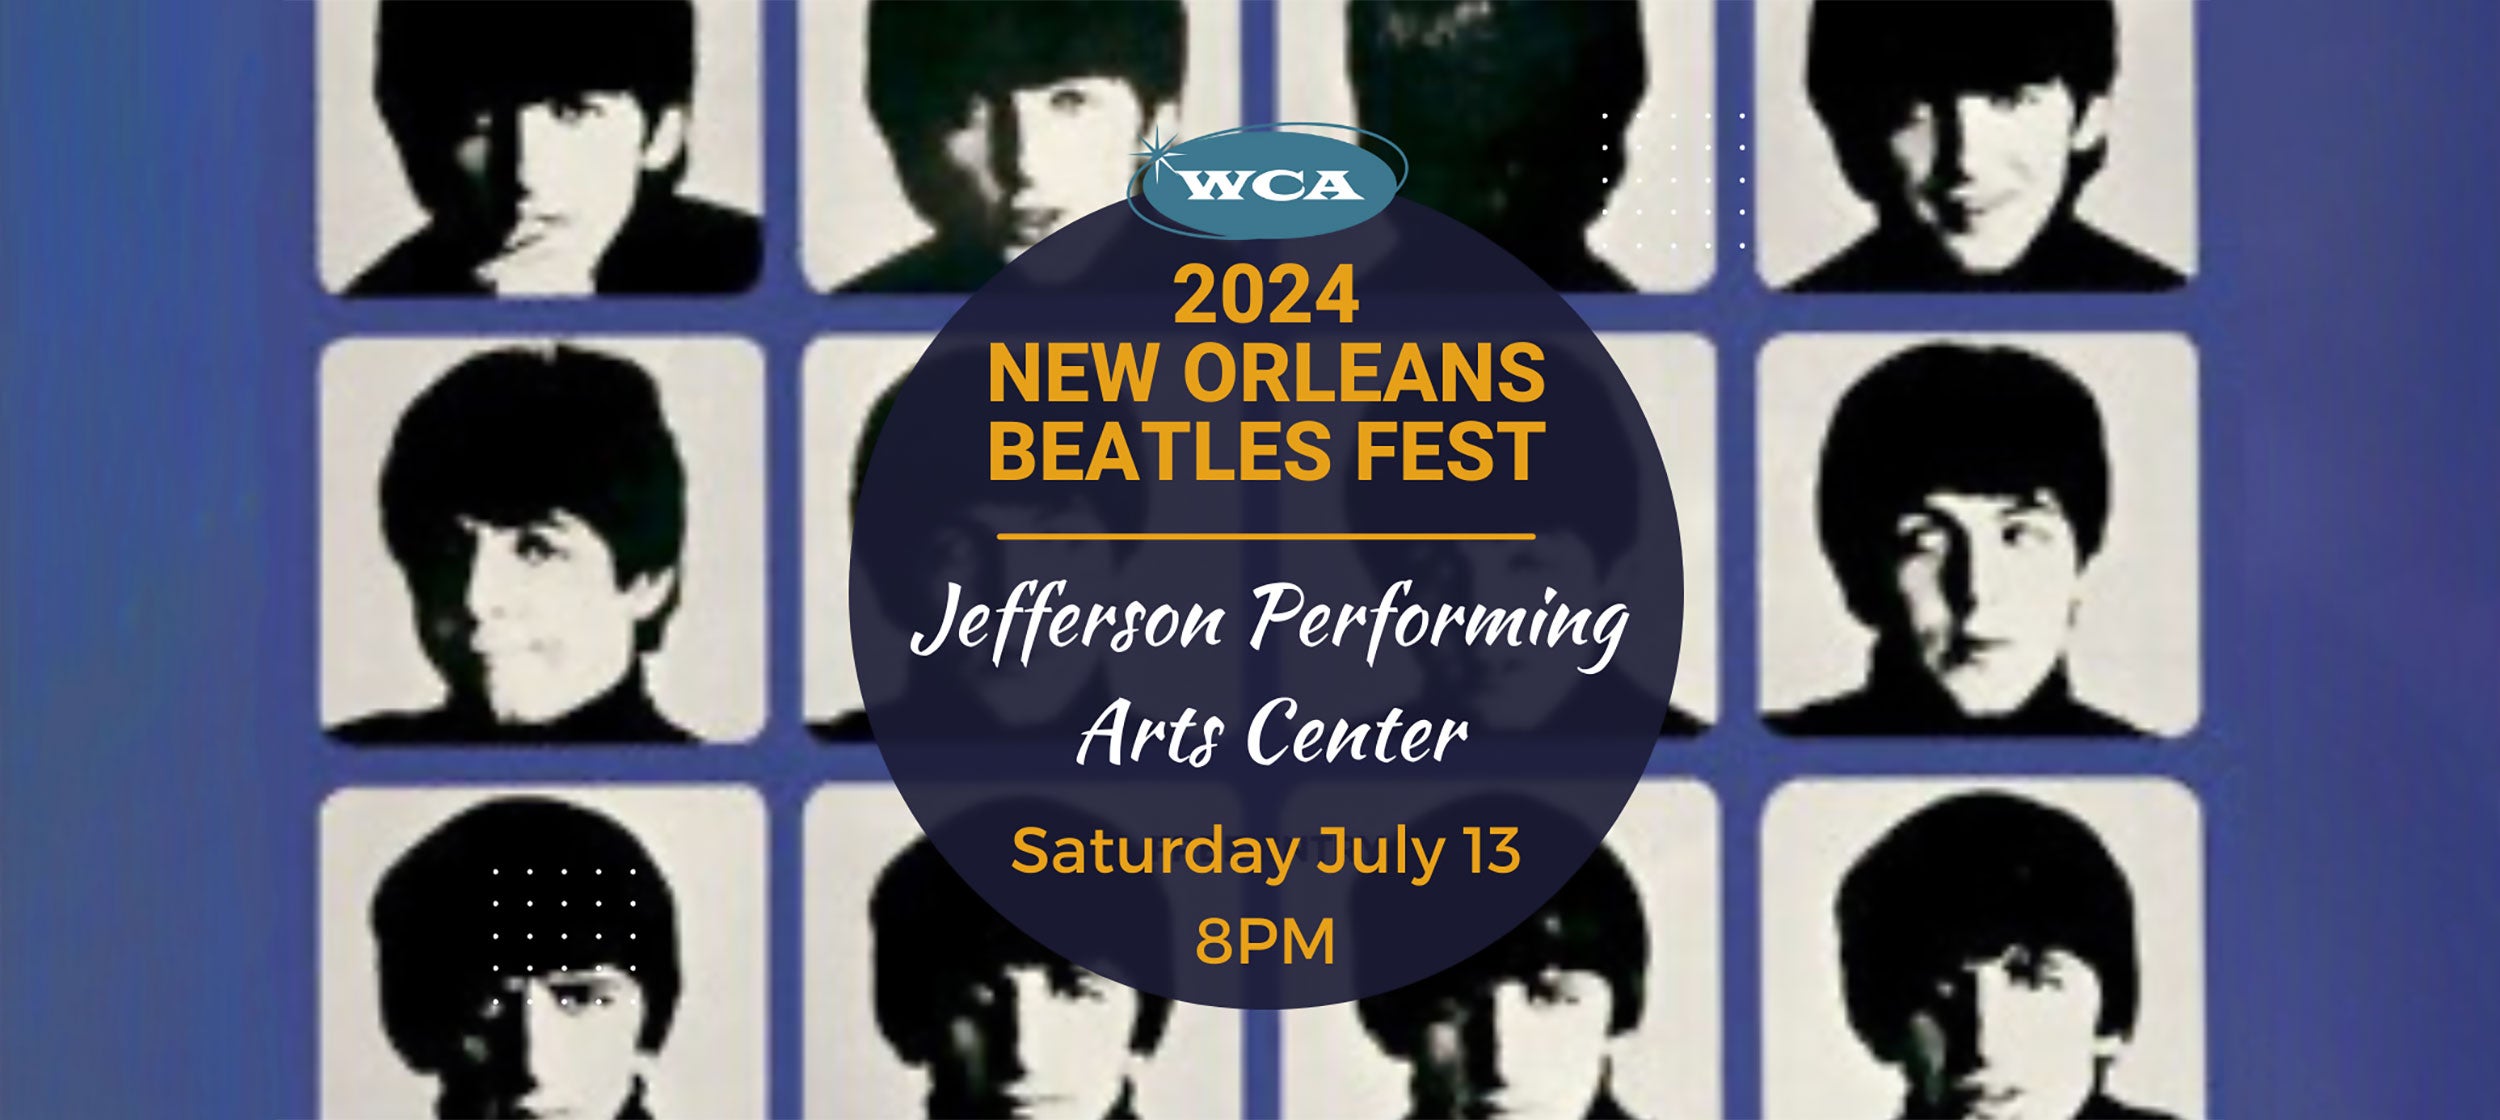 2024 New Orleans Beatles Fest